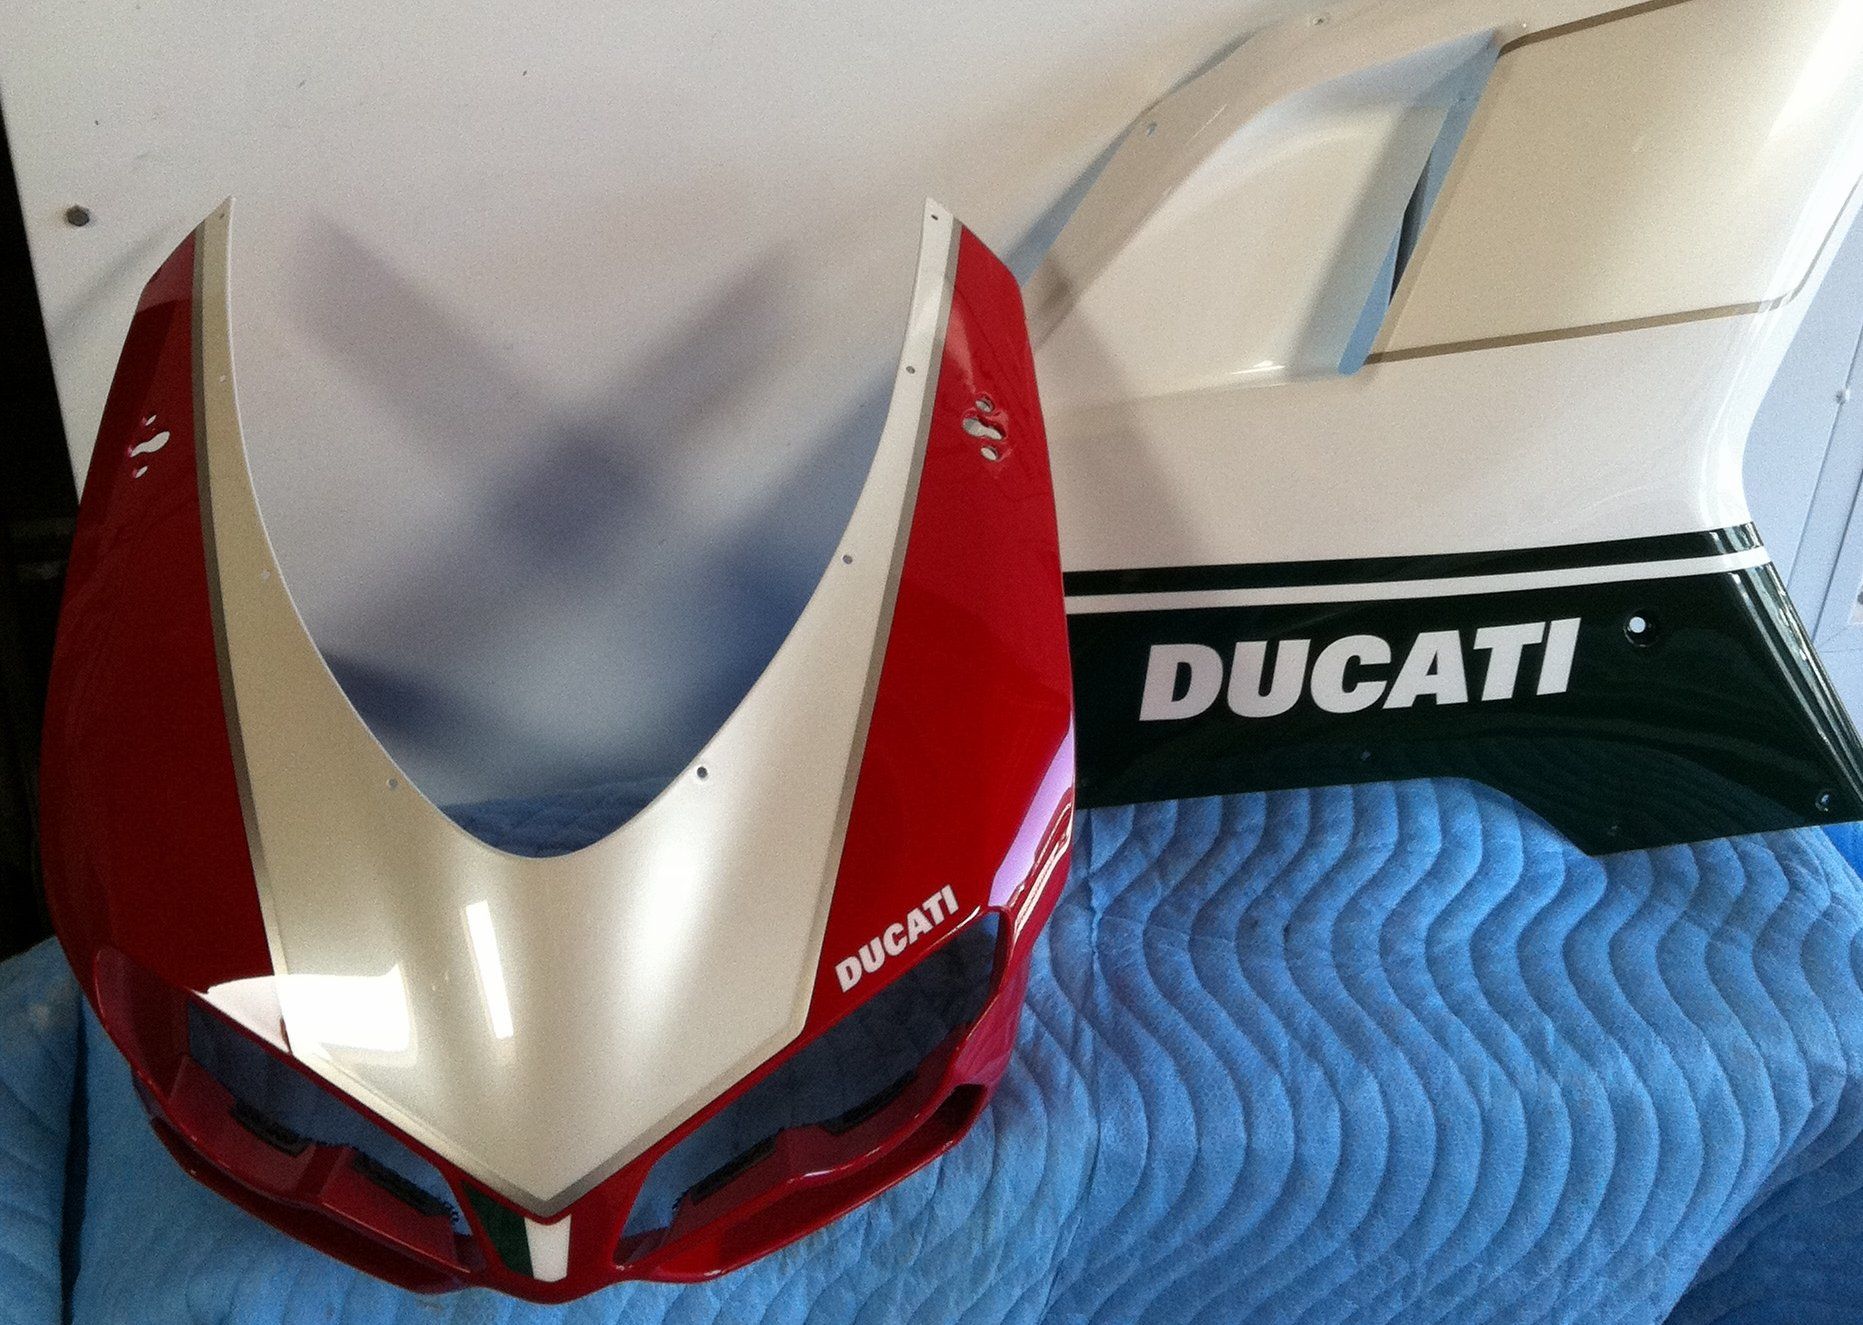 Ducati fairing after